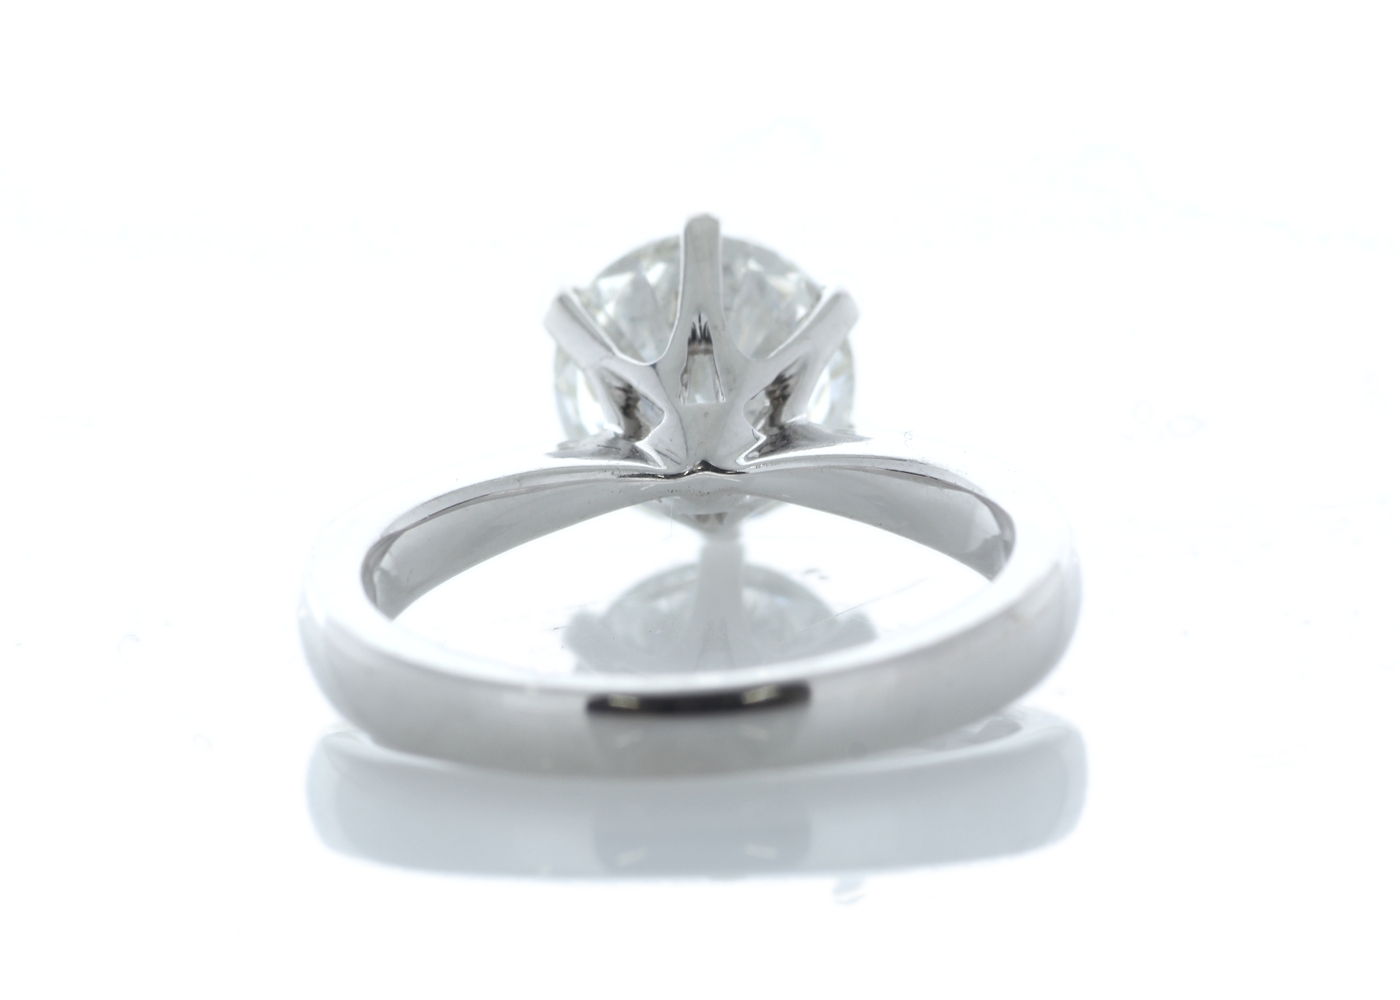 18k White Gold Prong Set Diamond Ring 2.35 Carats - Image 3 of 5